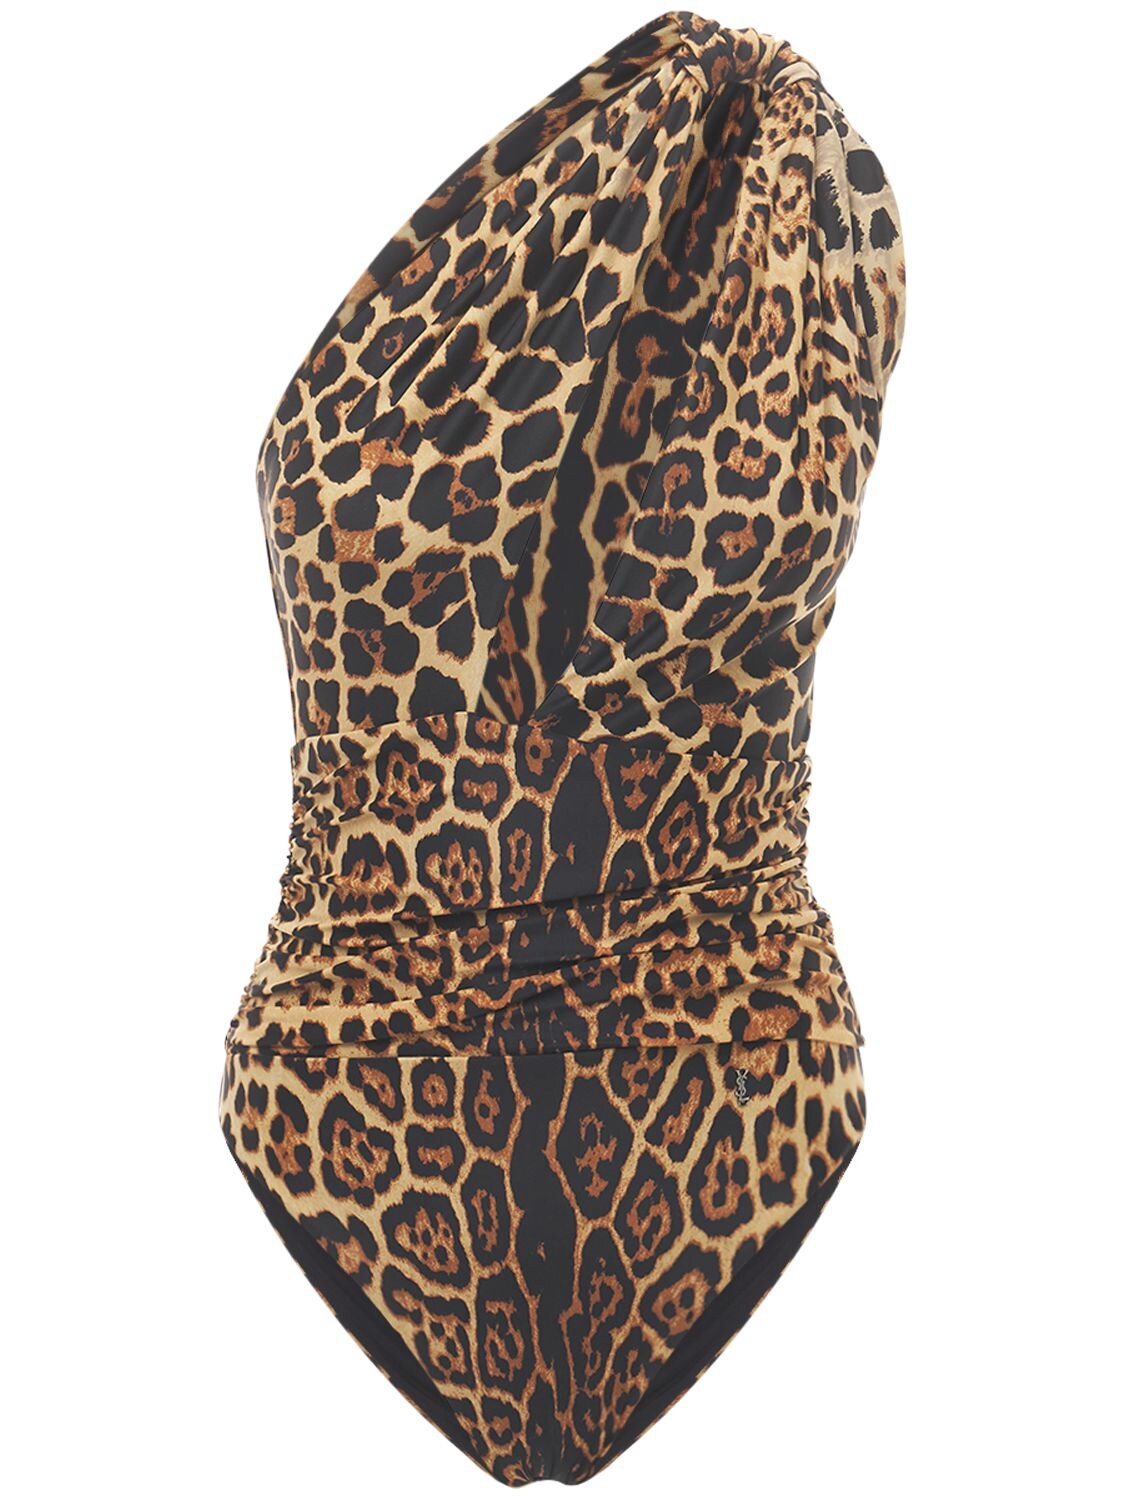 Leopard Print Lycra One Piece Swimsuit